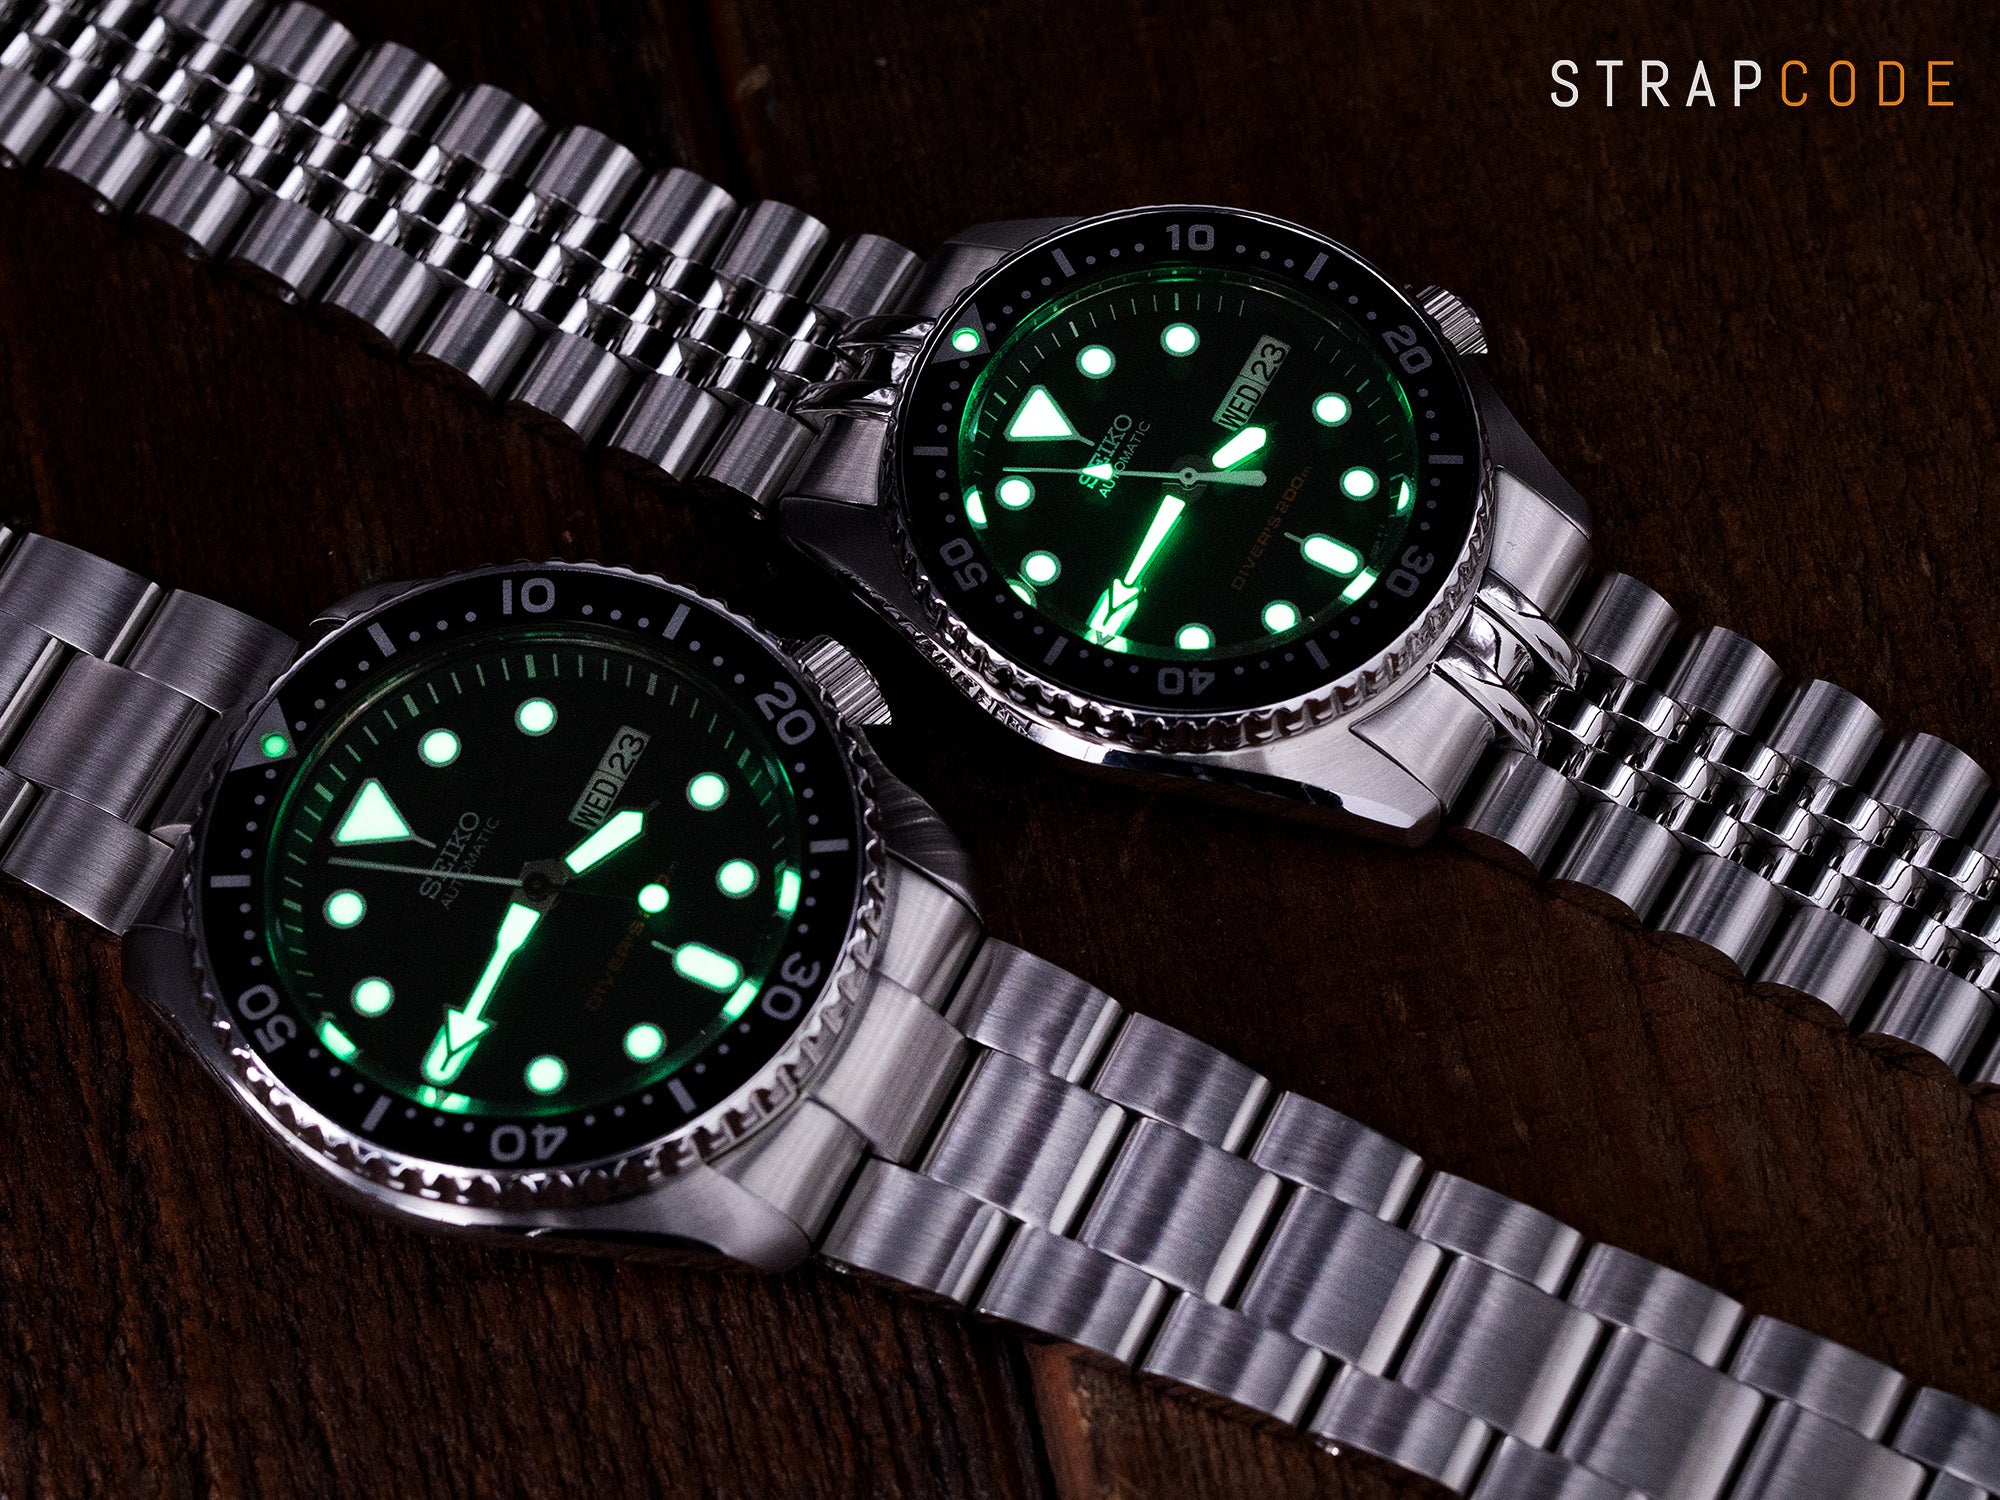 Impressive LumiBrite (or Lumi Brite) glow of SKX007 and SKX013 in darkness by Strapcode watch bands